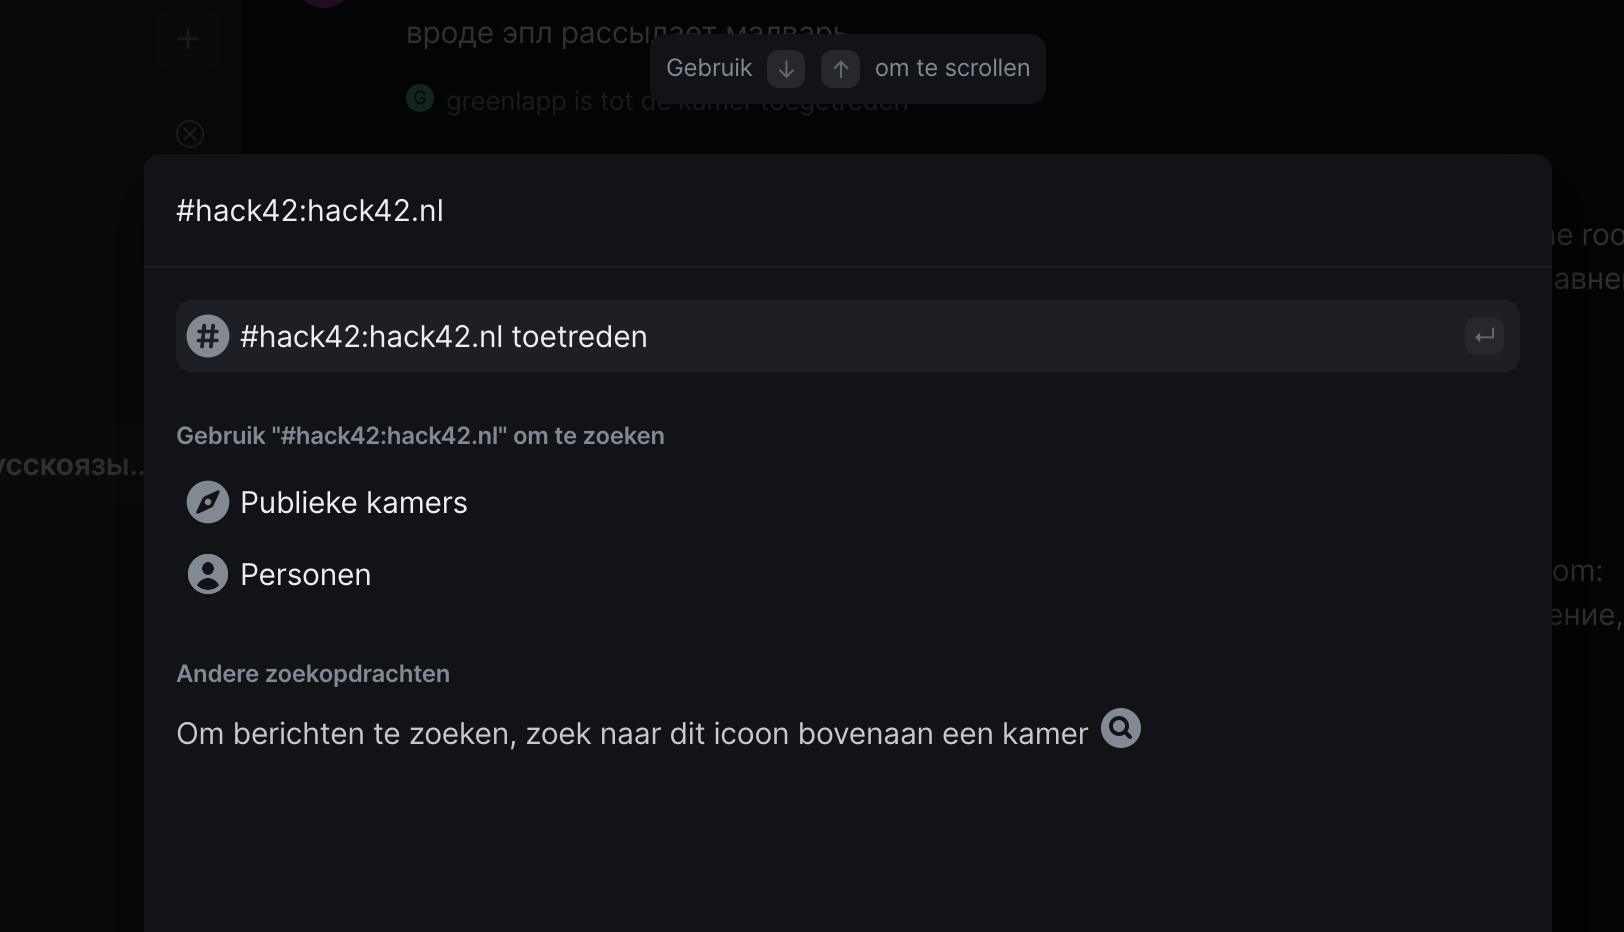 Type: #hack42:hack42.nl en klik op #hack42:hack42.nl toetreden